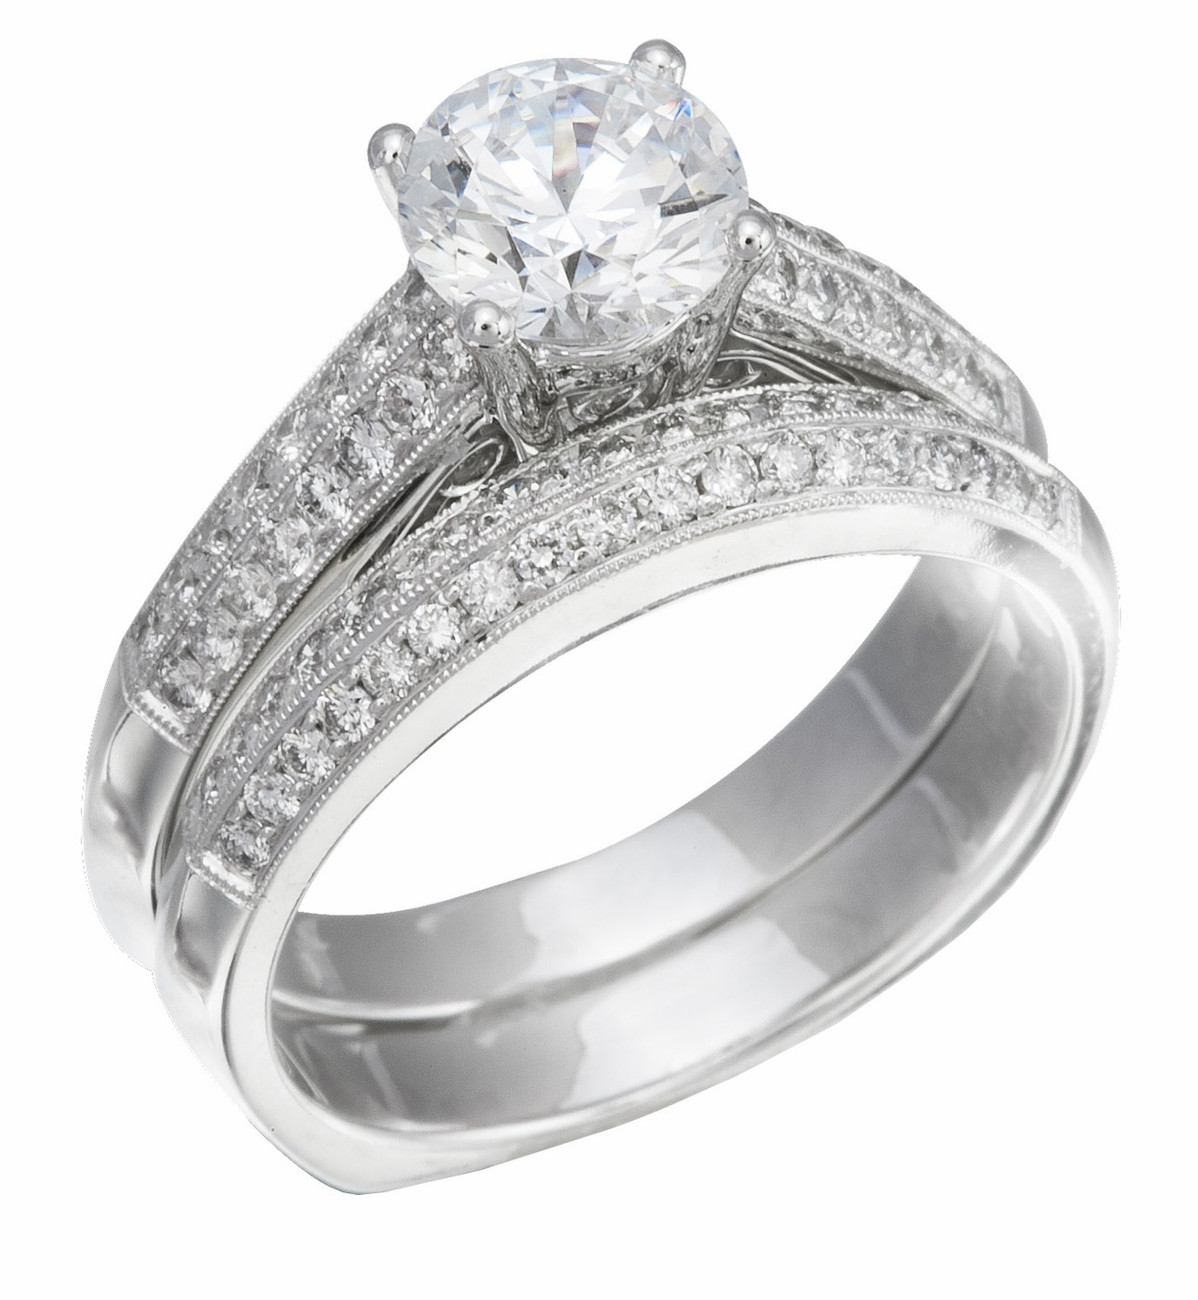 Gold Wedding Ring Sets
 Wedding Ring Set White Gold with Diamonds on Ring & Band